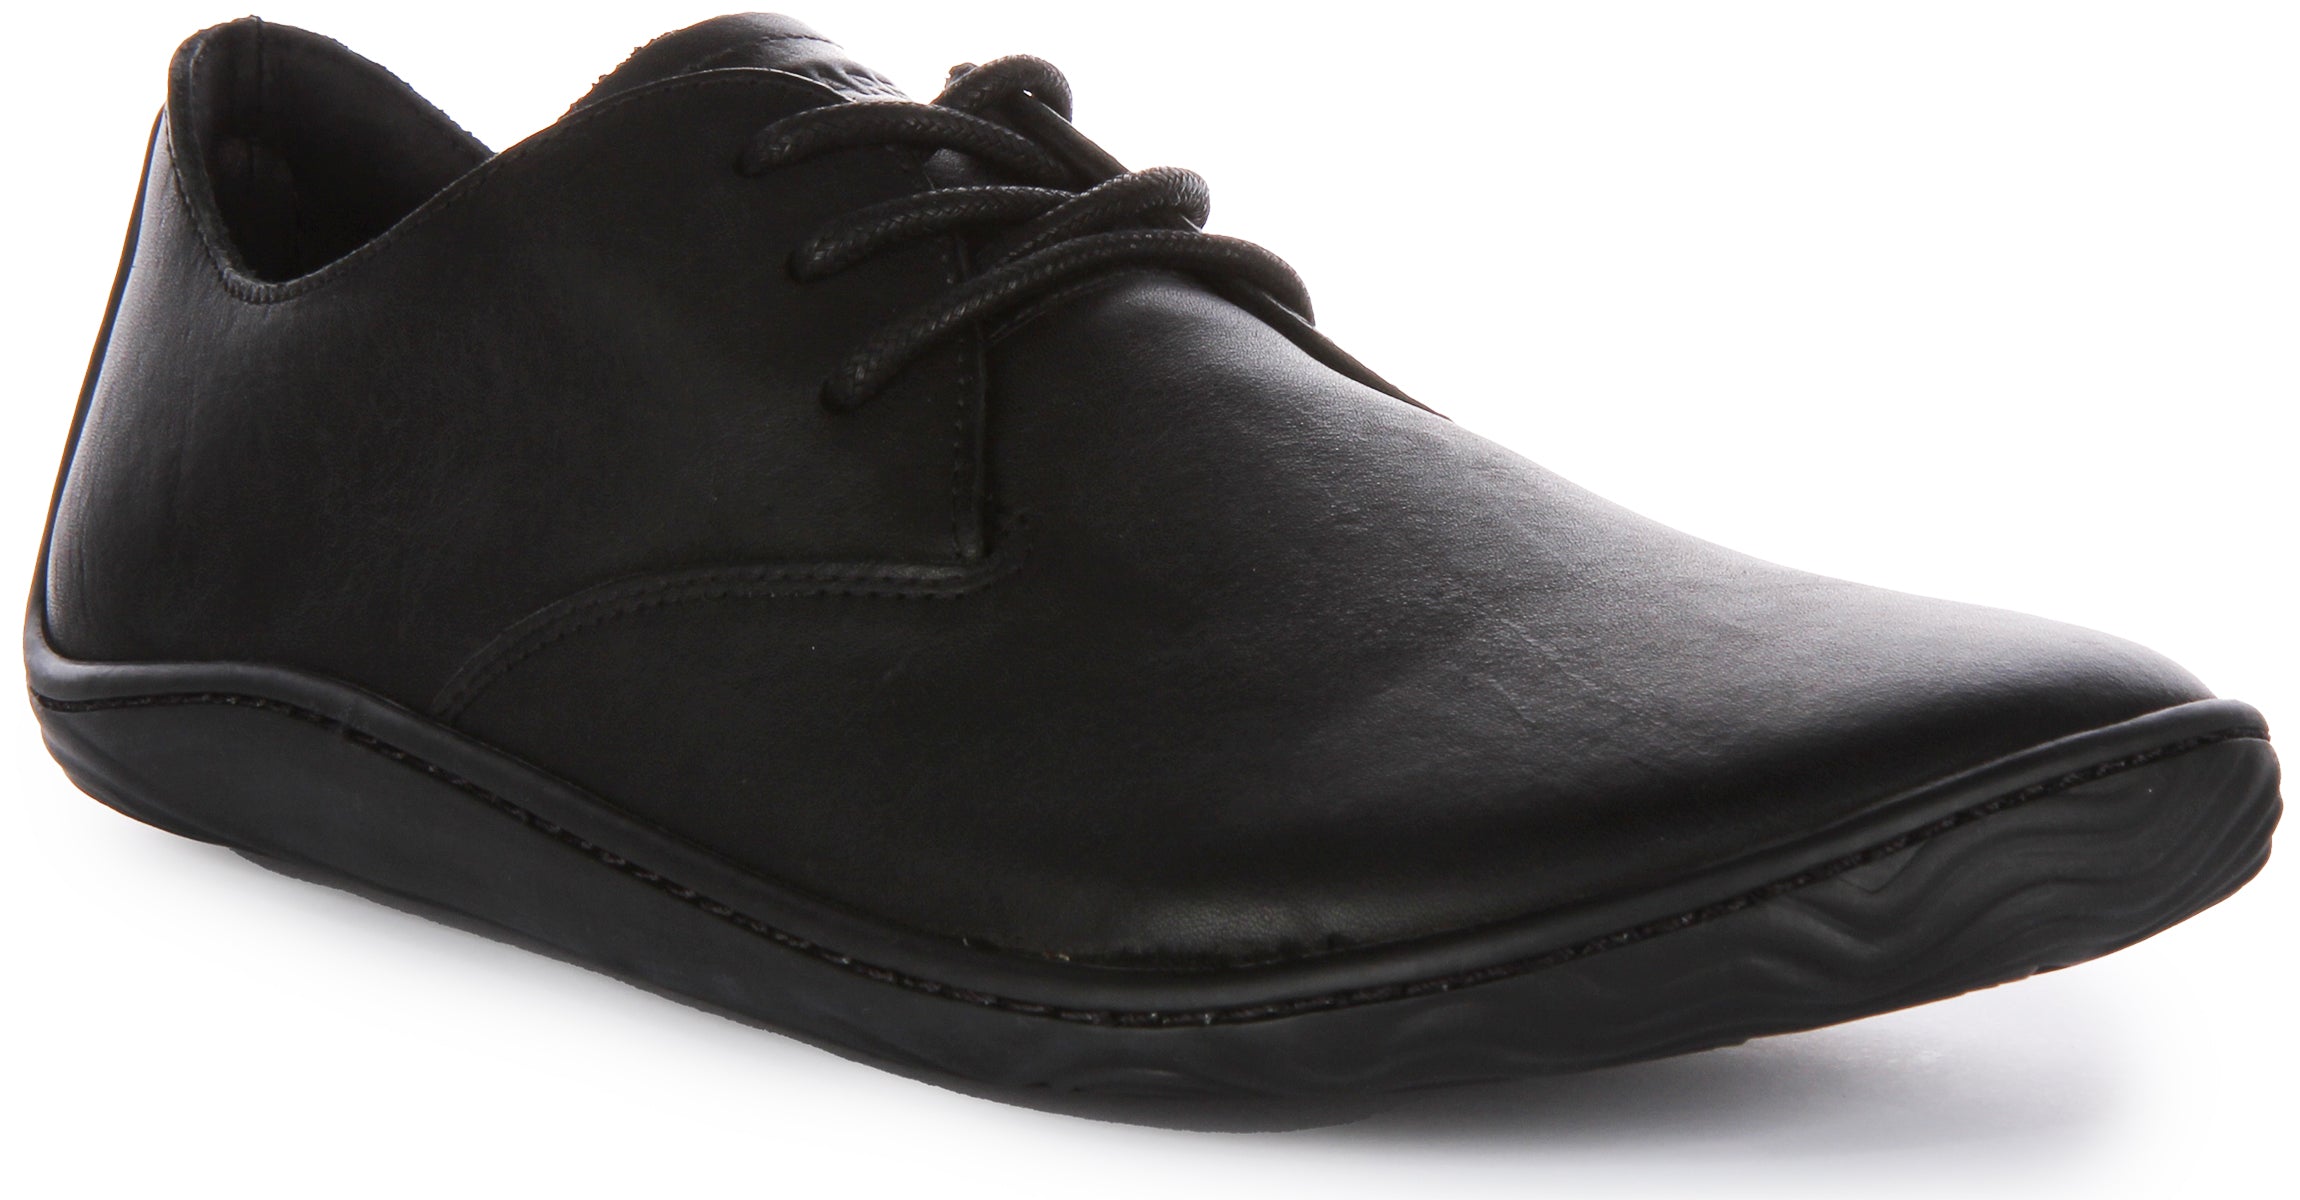 Zapatos Descalzos - Hombre - Piel Natural - Negro - Las Zapatillas